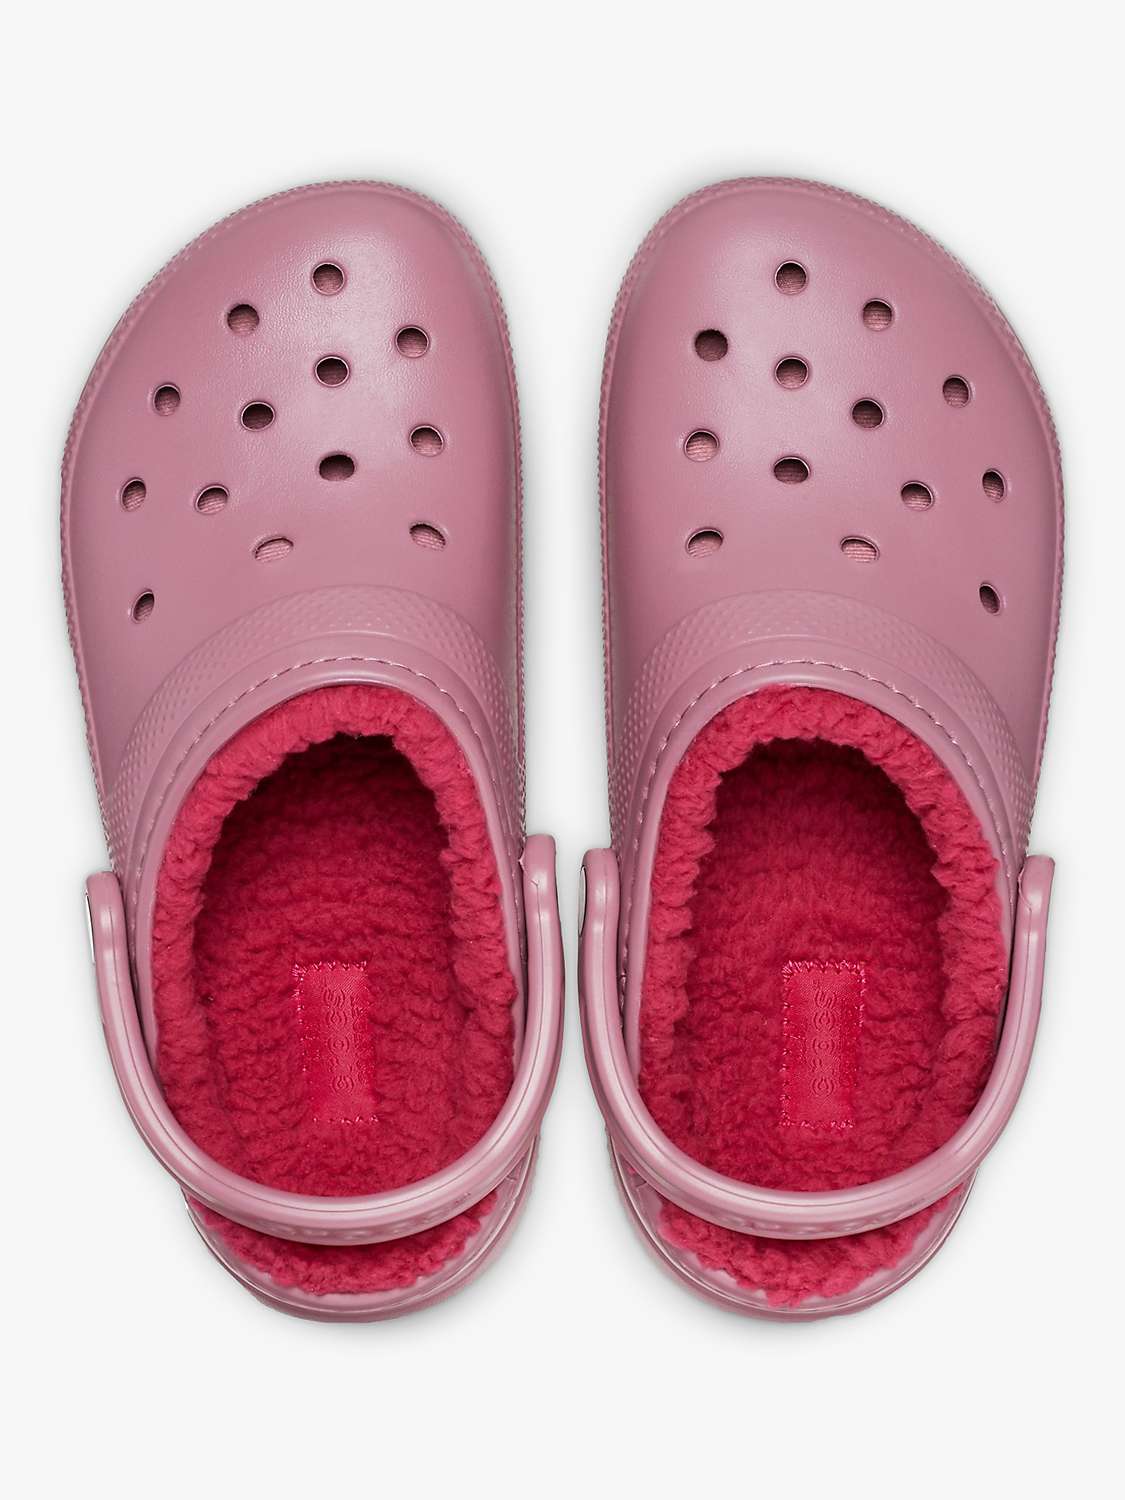 Buy Crocs Classic Lined Clogs, Dark Pink Online at johnlewis.com